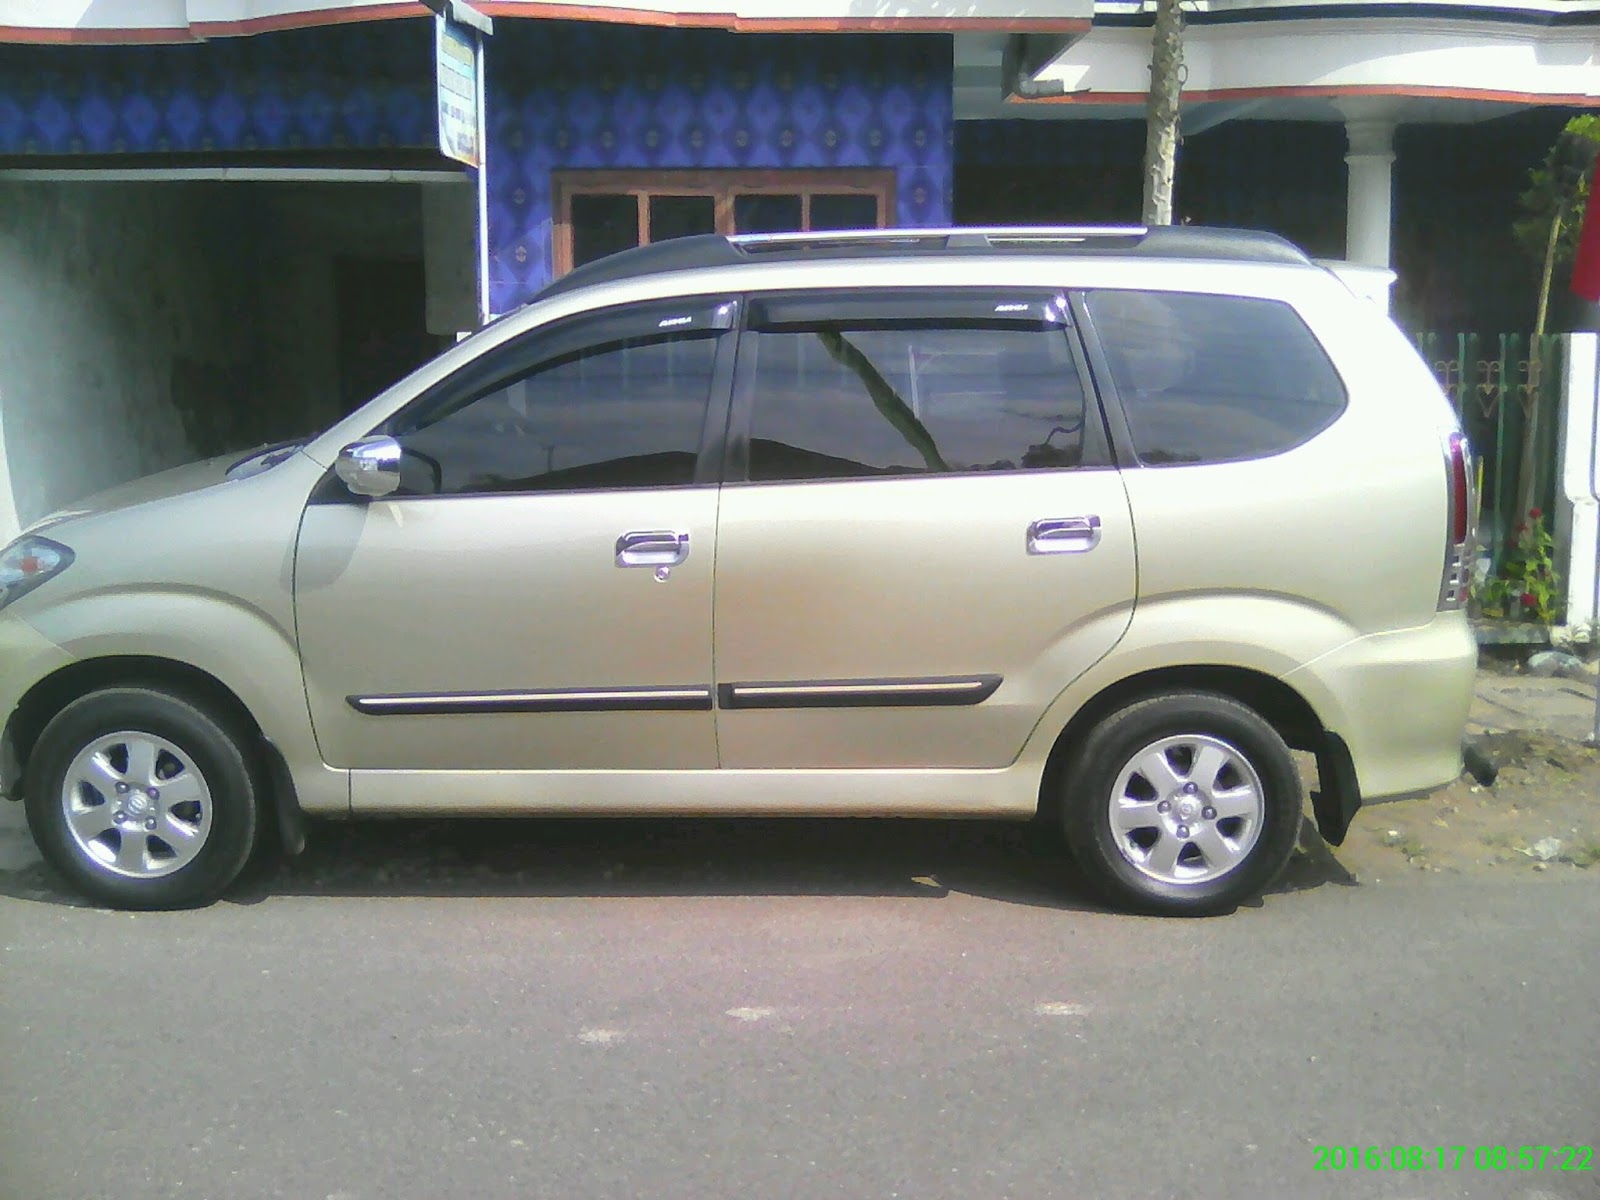  Jual  Avanza  type G 2005 istimewa Tokobagus Mobil  Bekas